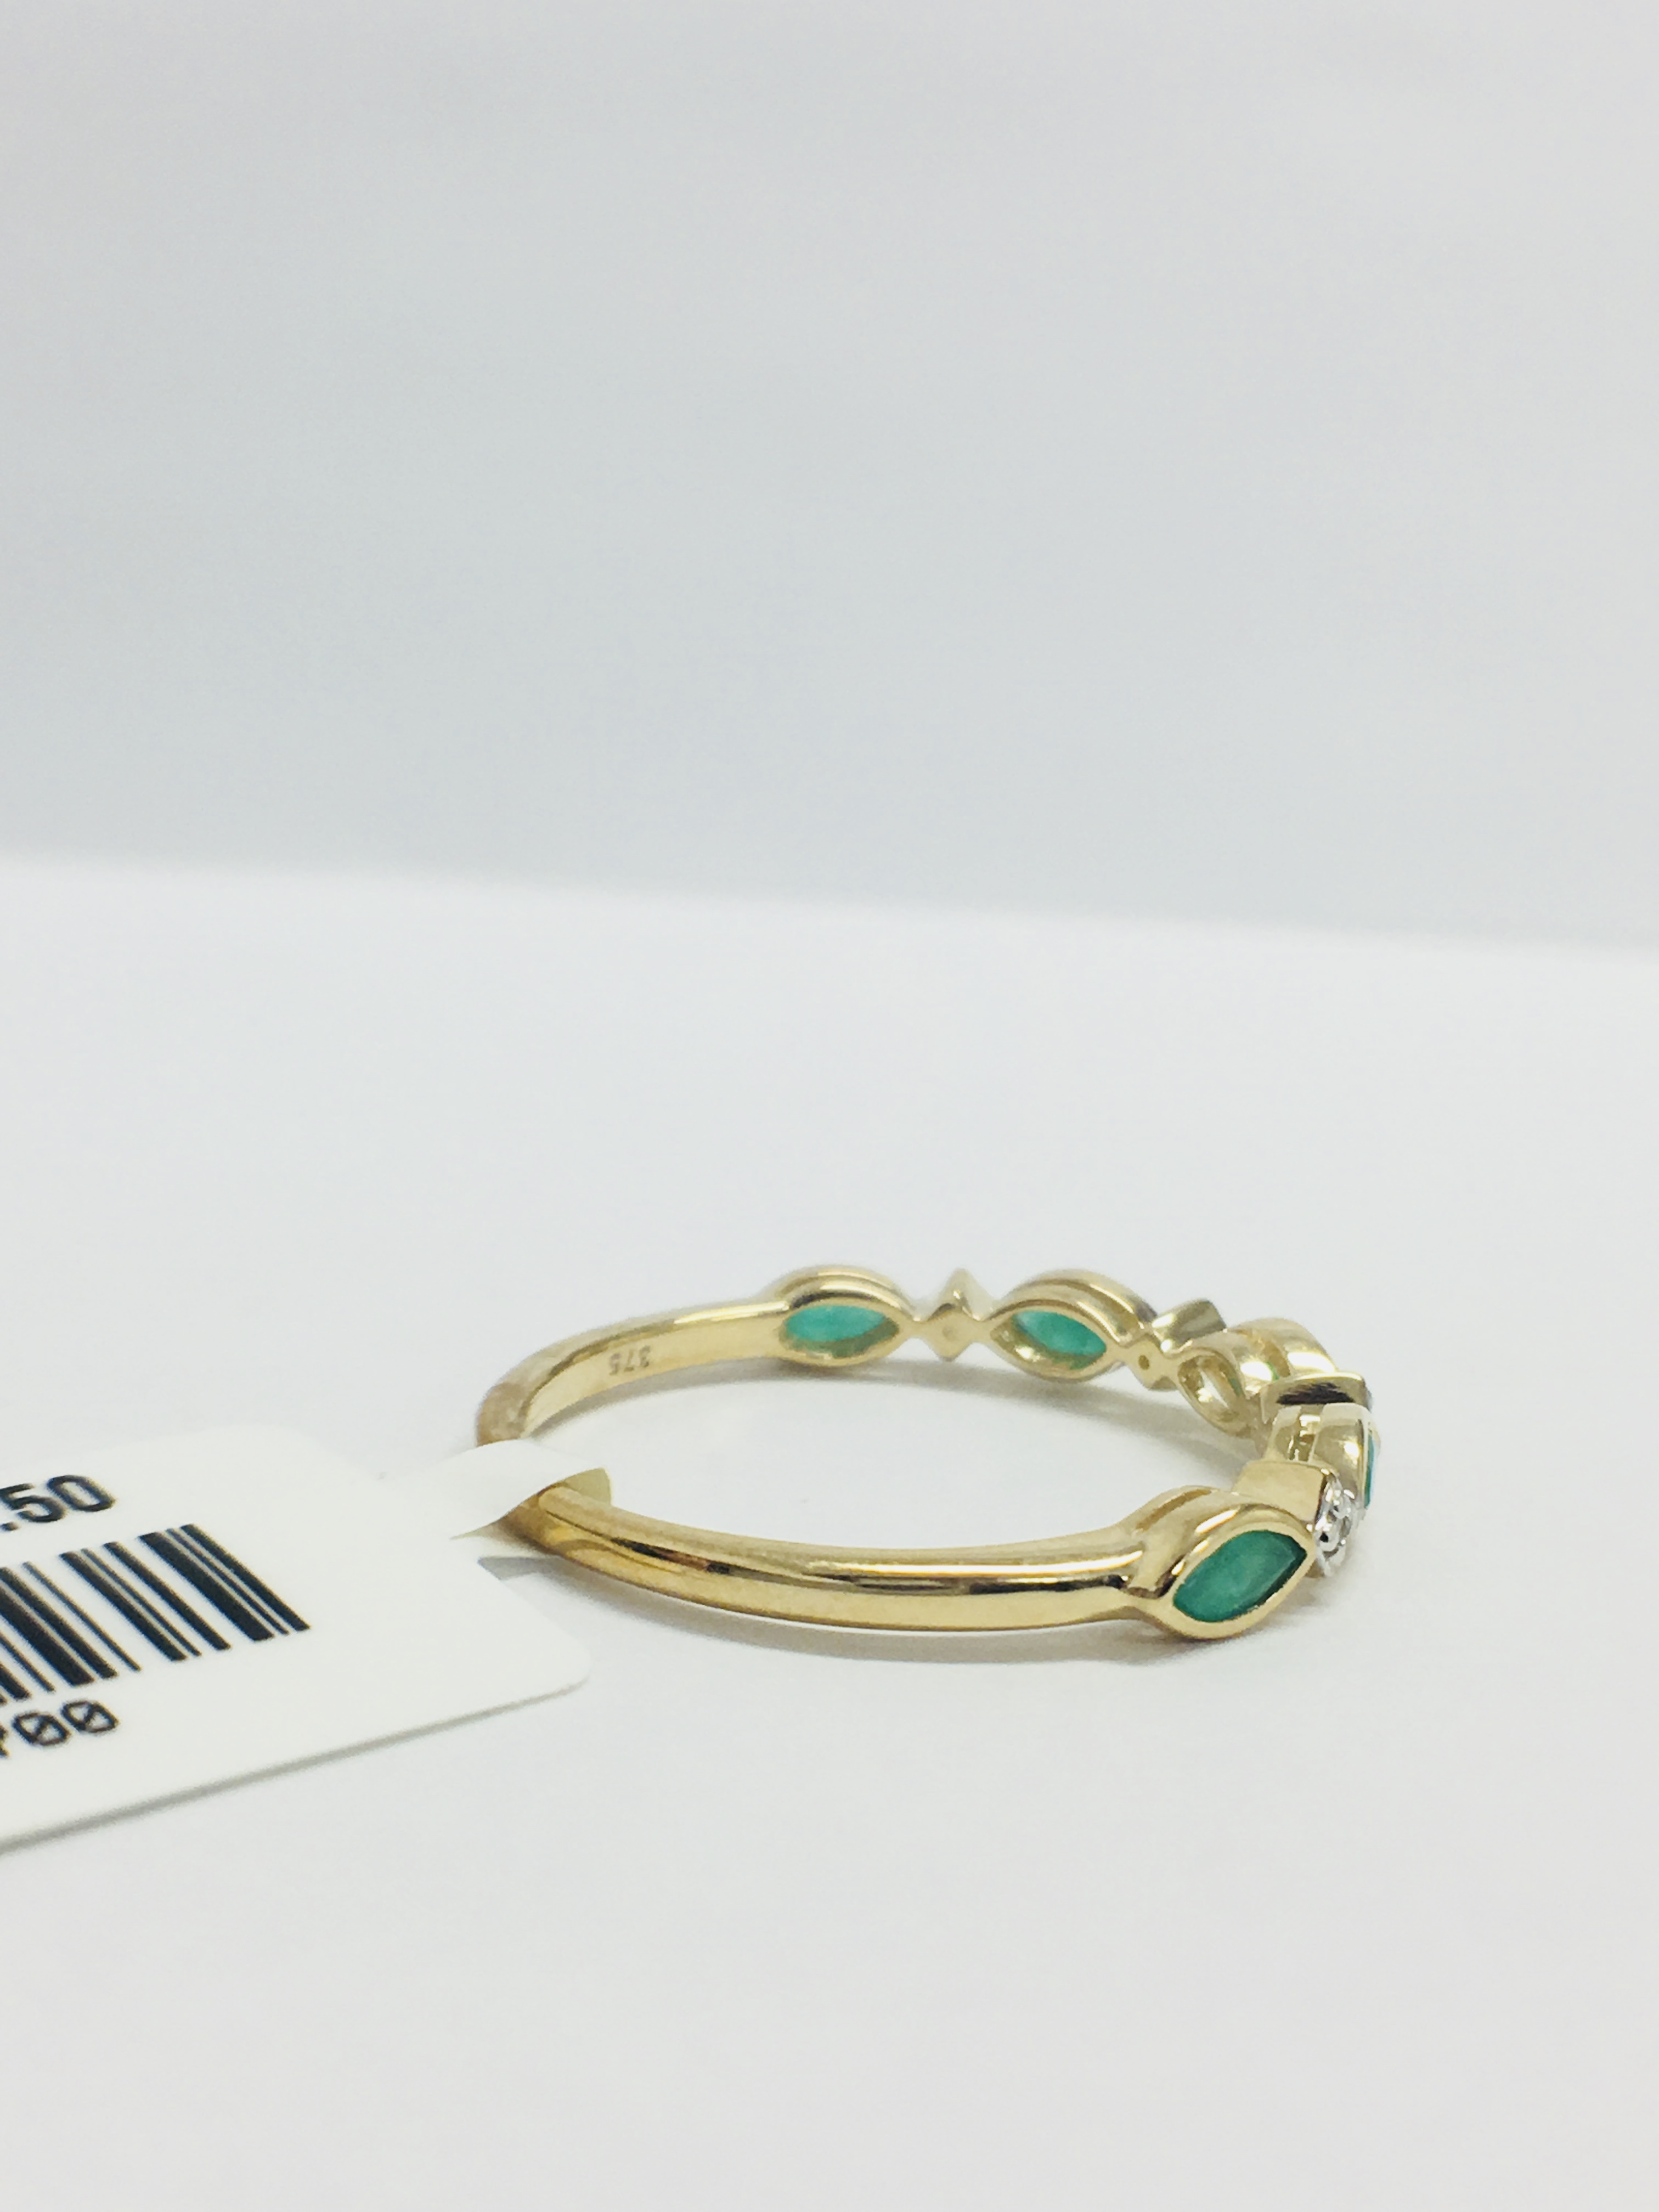 9Ct Yellow Gold Emerald Diamond Band Ring, - Image 6 of 9